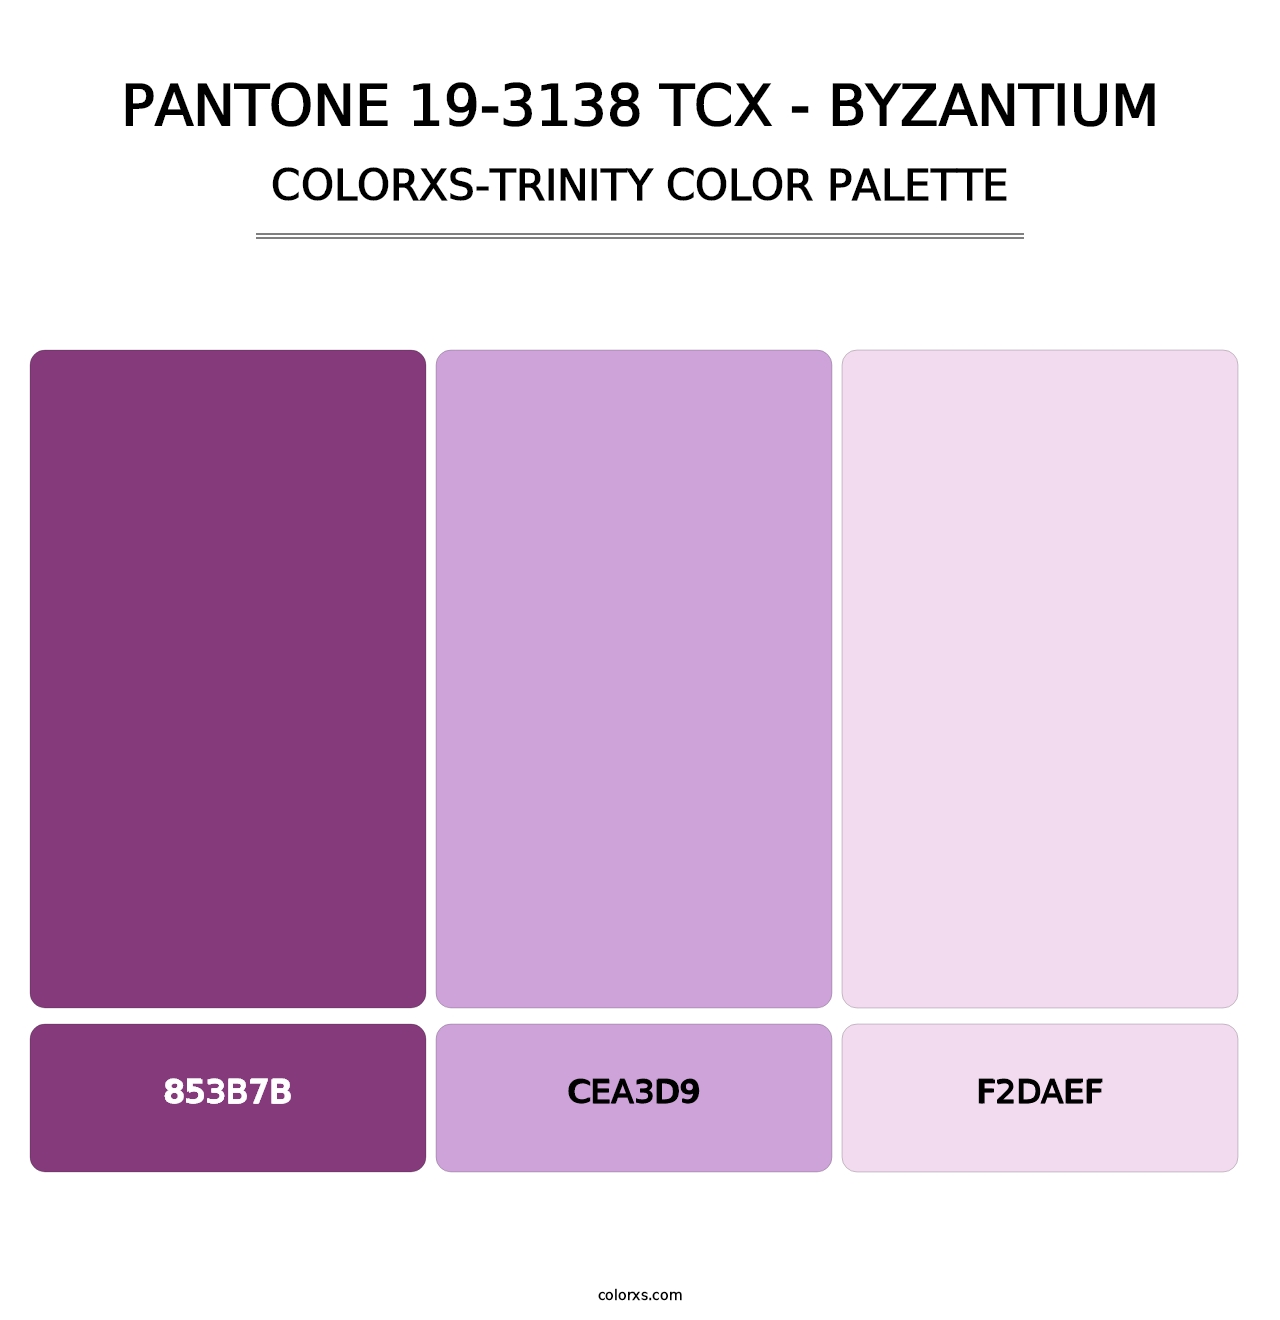 PANTONE 19-3138 TCX - Byzantium - Colorxs Trinity Palette